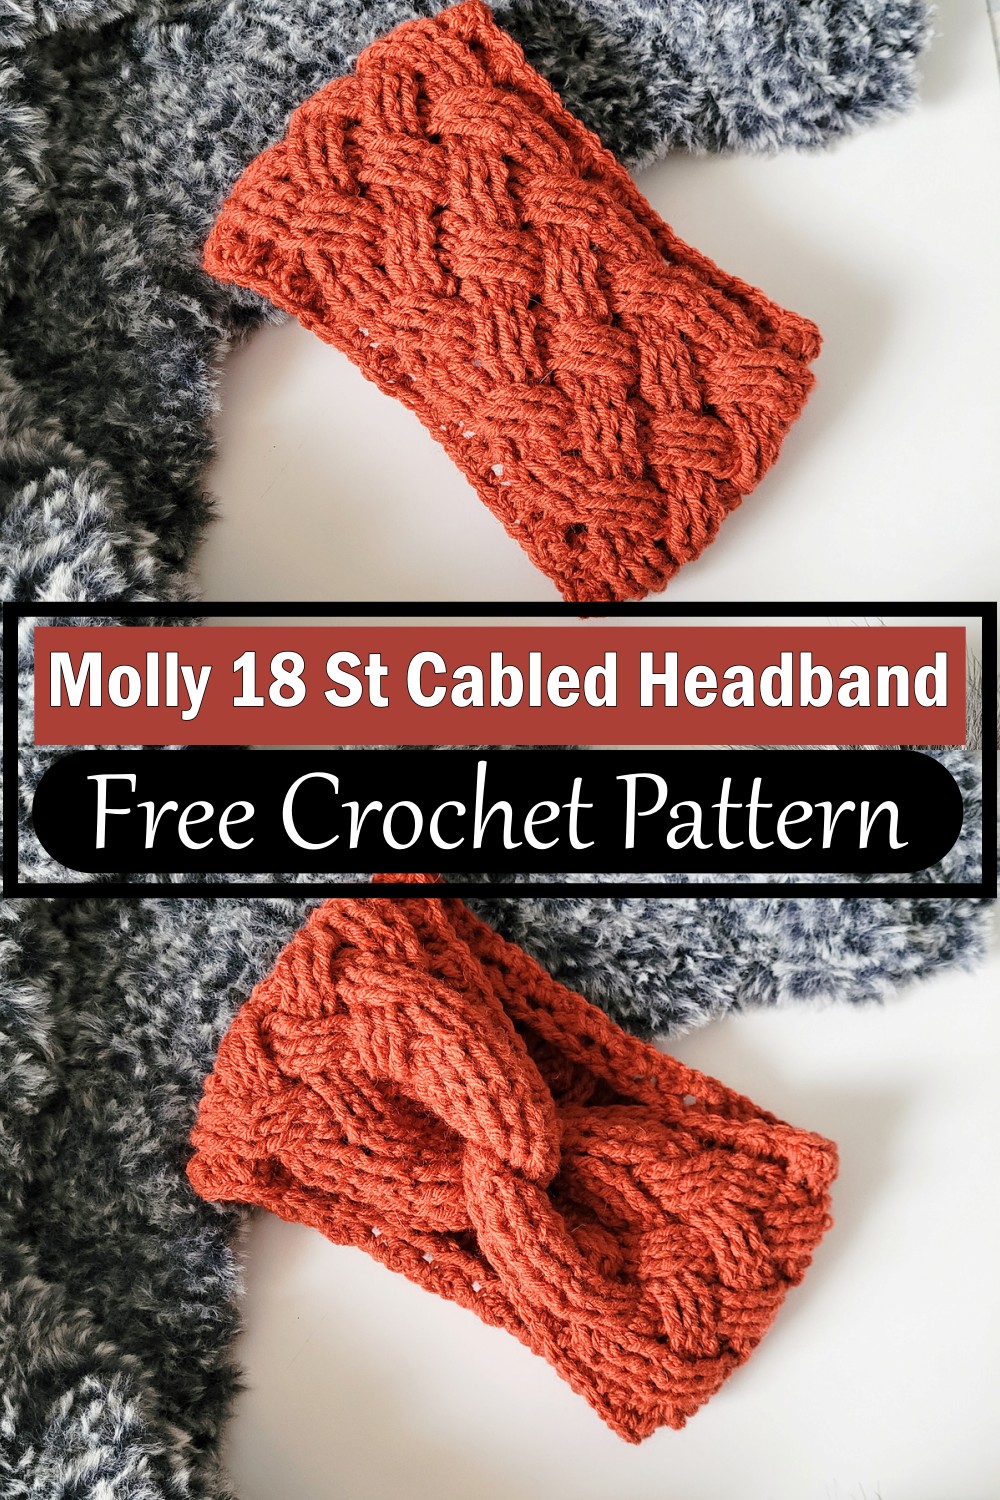 Molly 18 St Cabled Headband